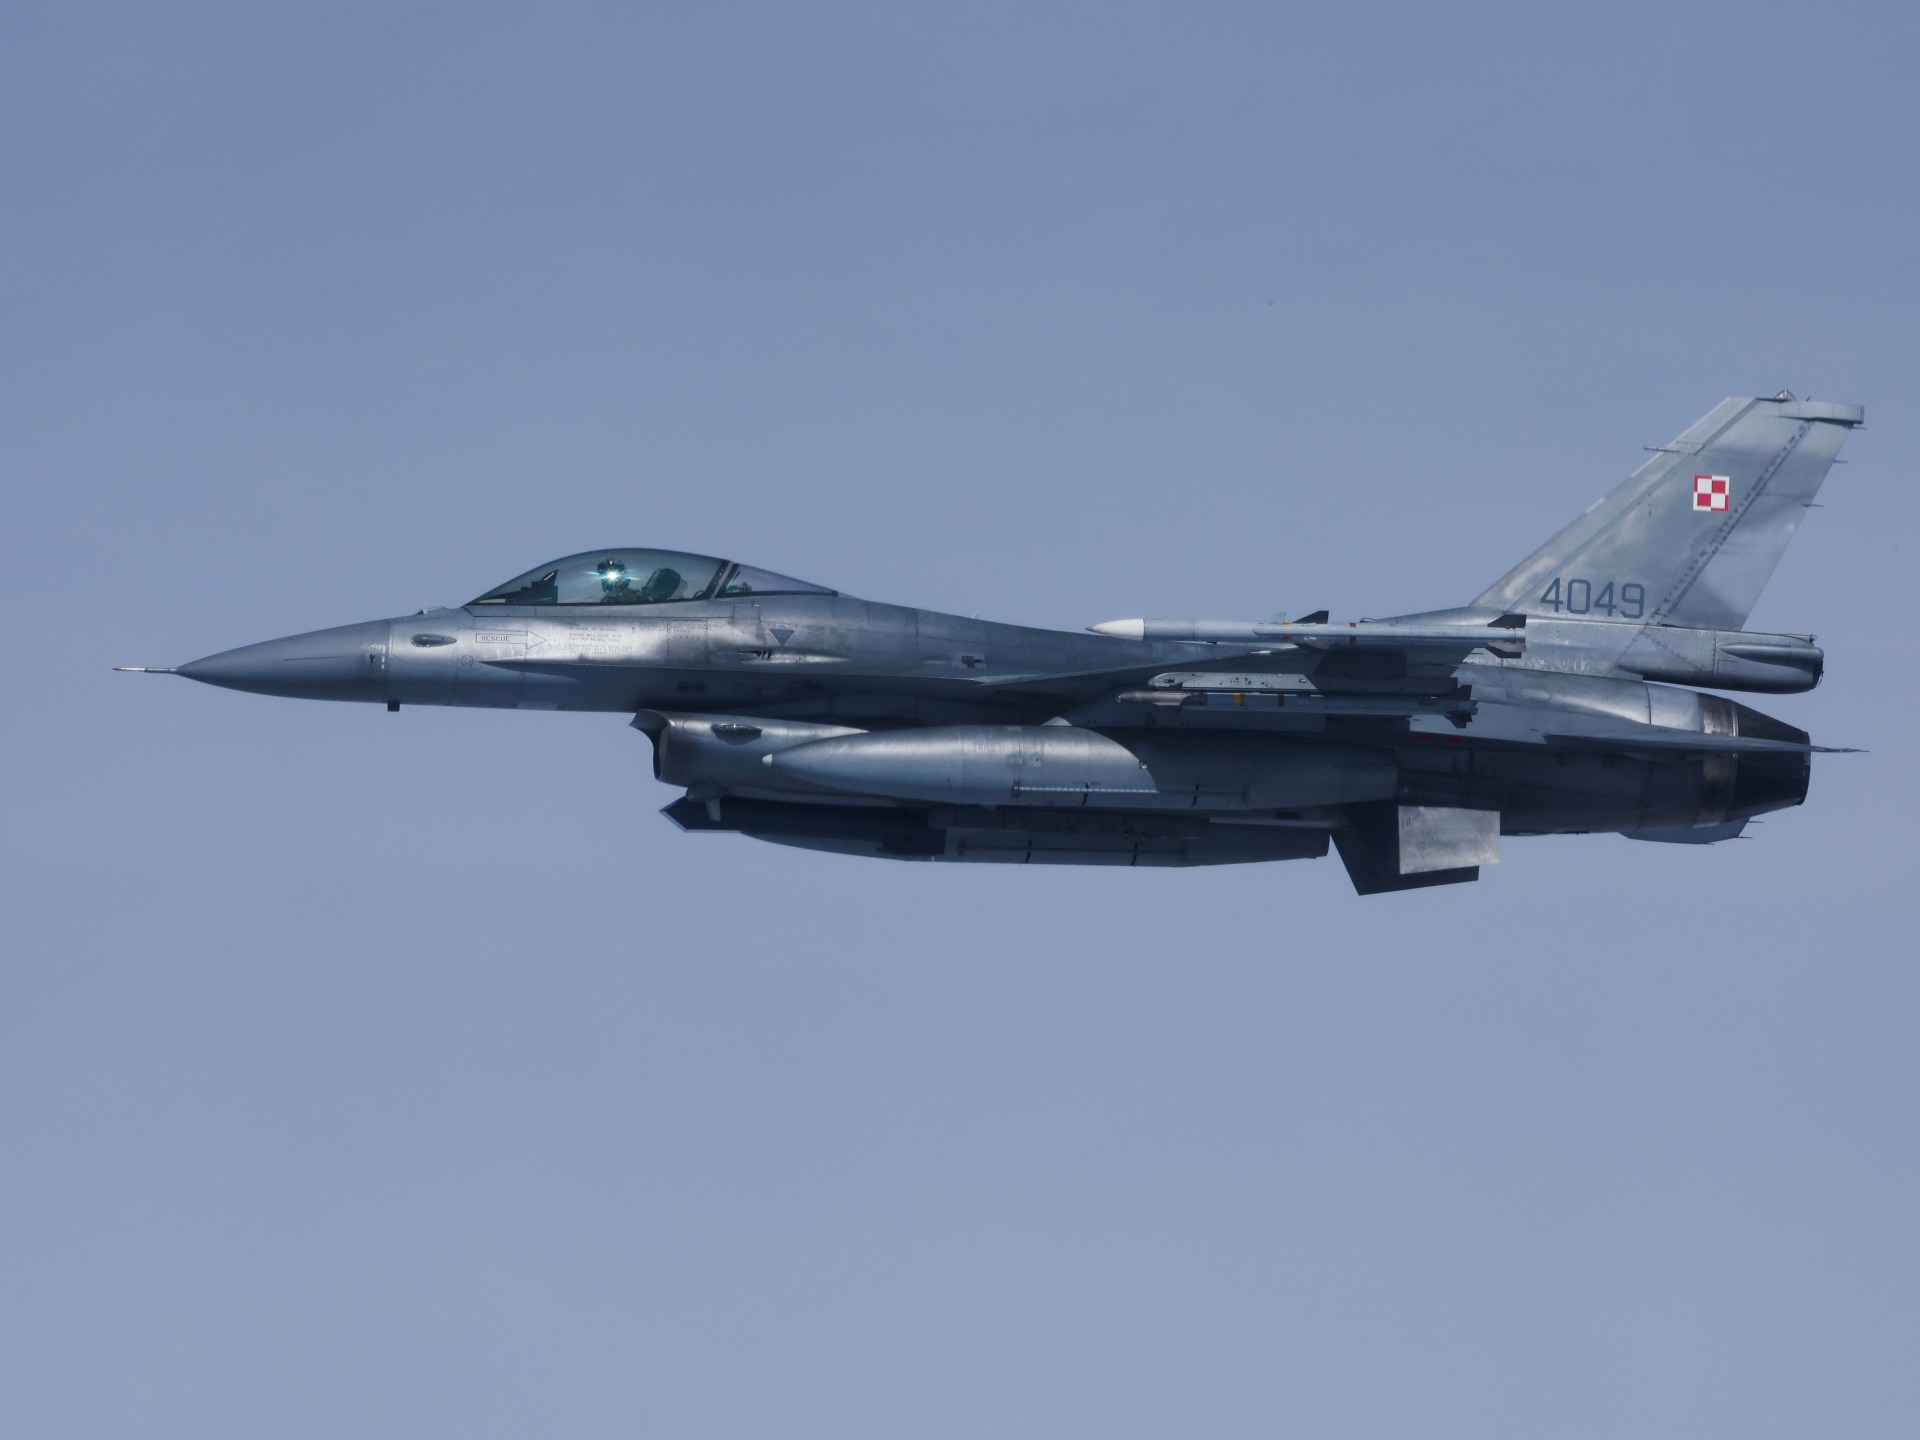 F-16s would give Ukraine an advantage, but risk escalation